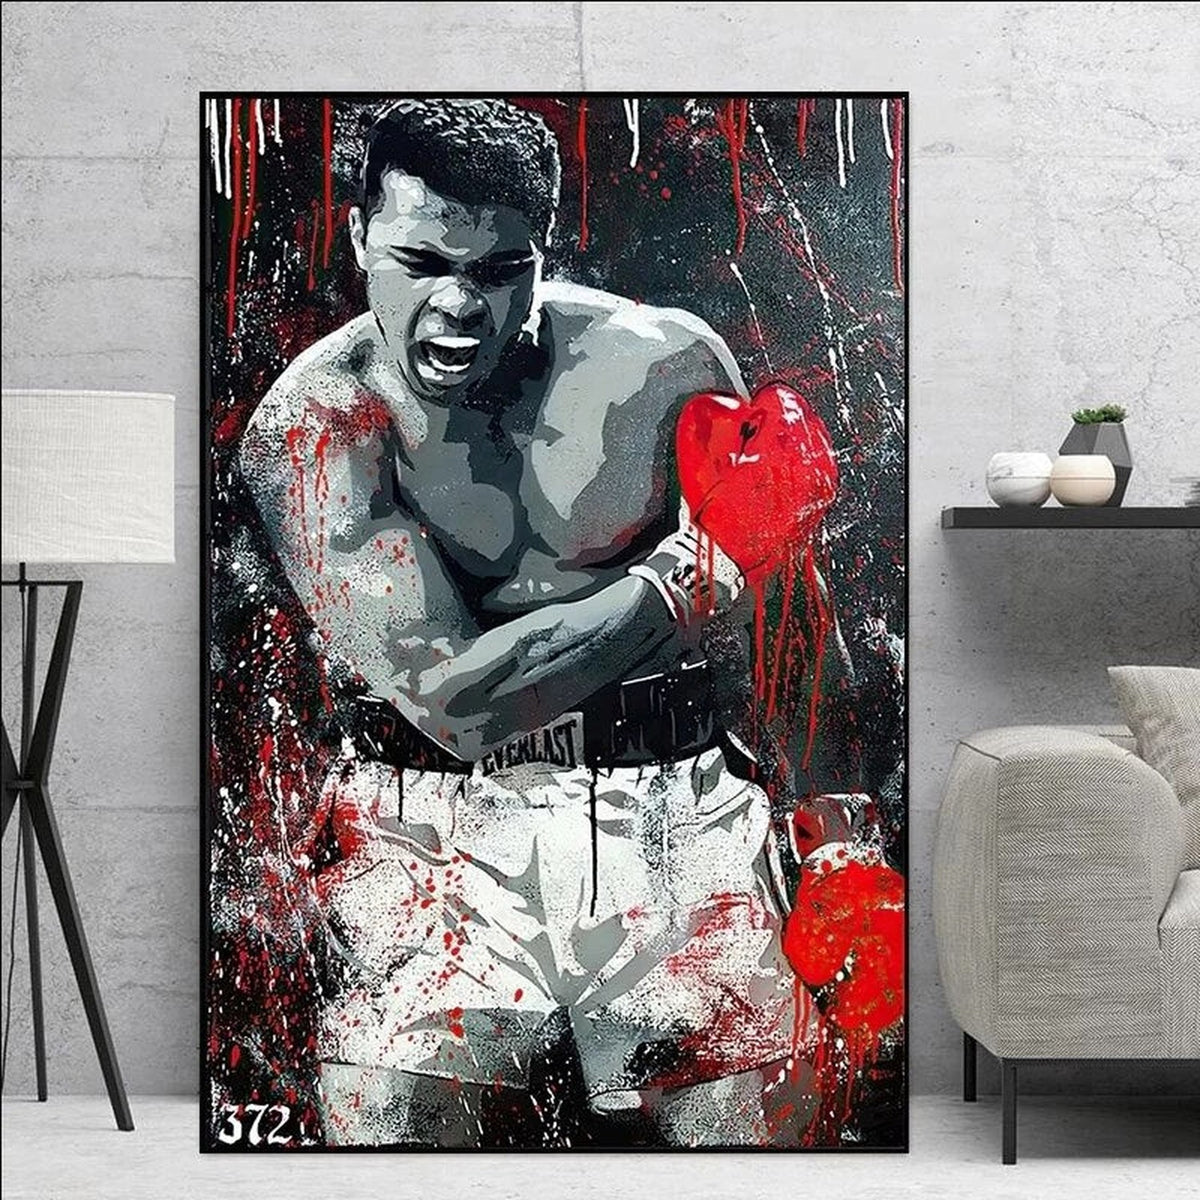 Muhammad Ali Poster: Iconic Boxing Legend